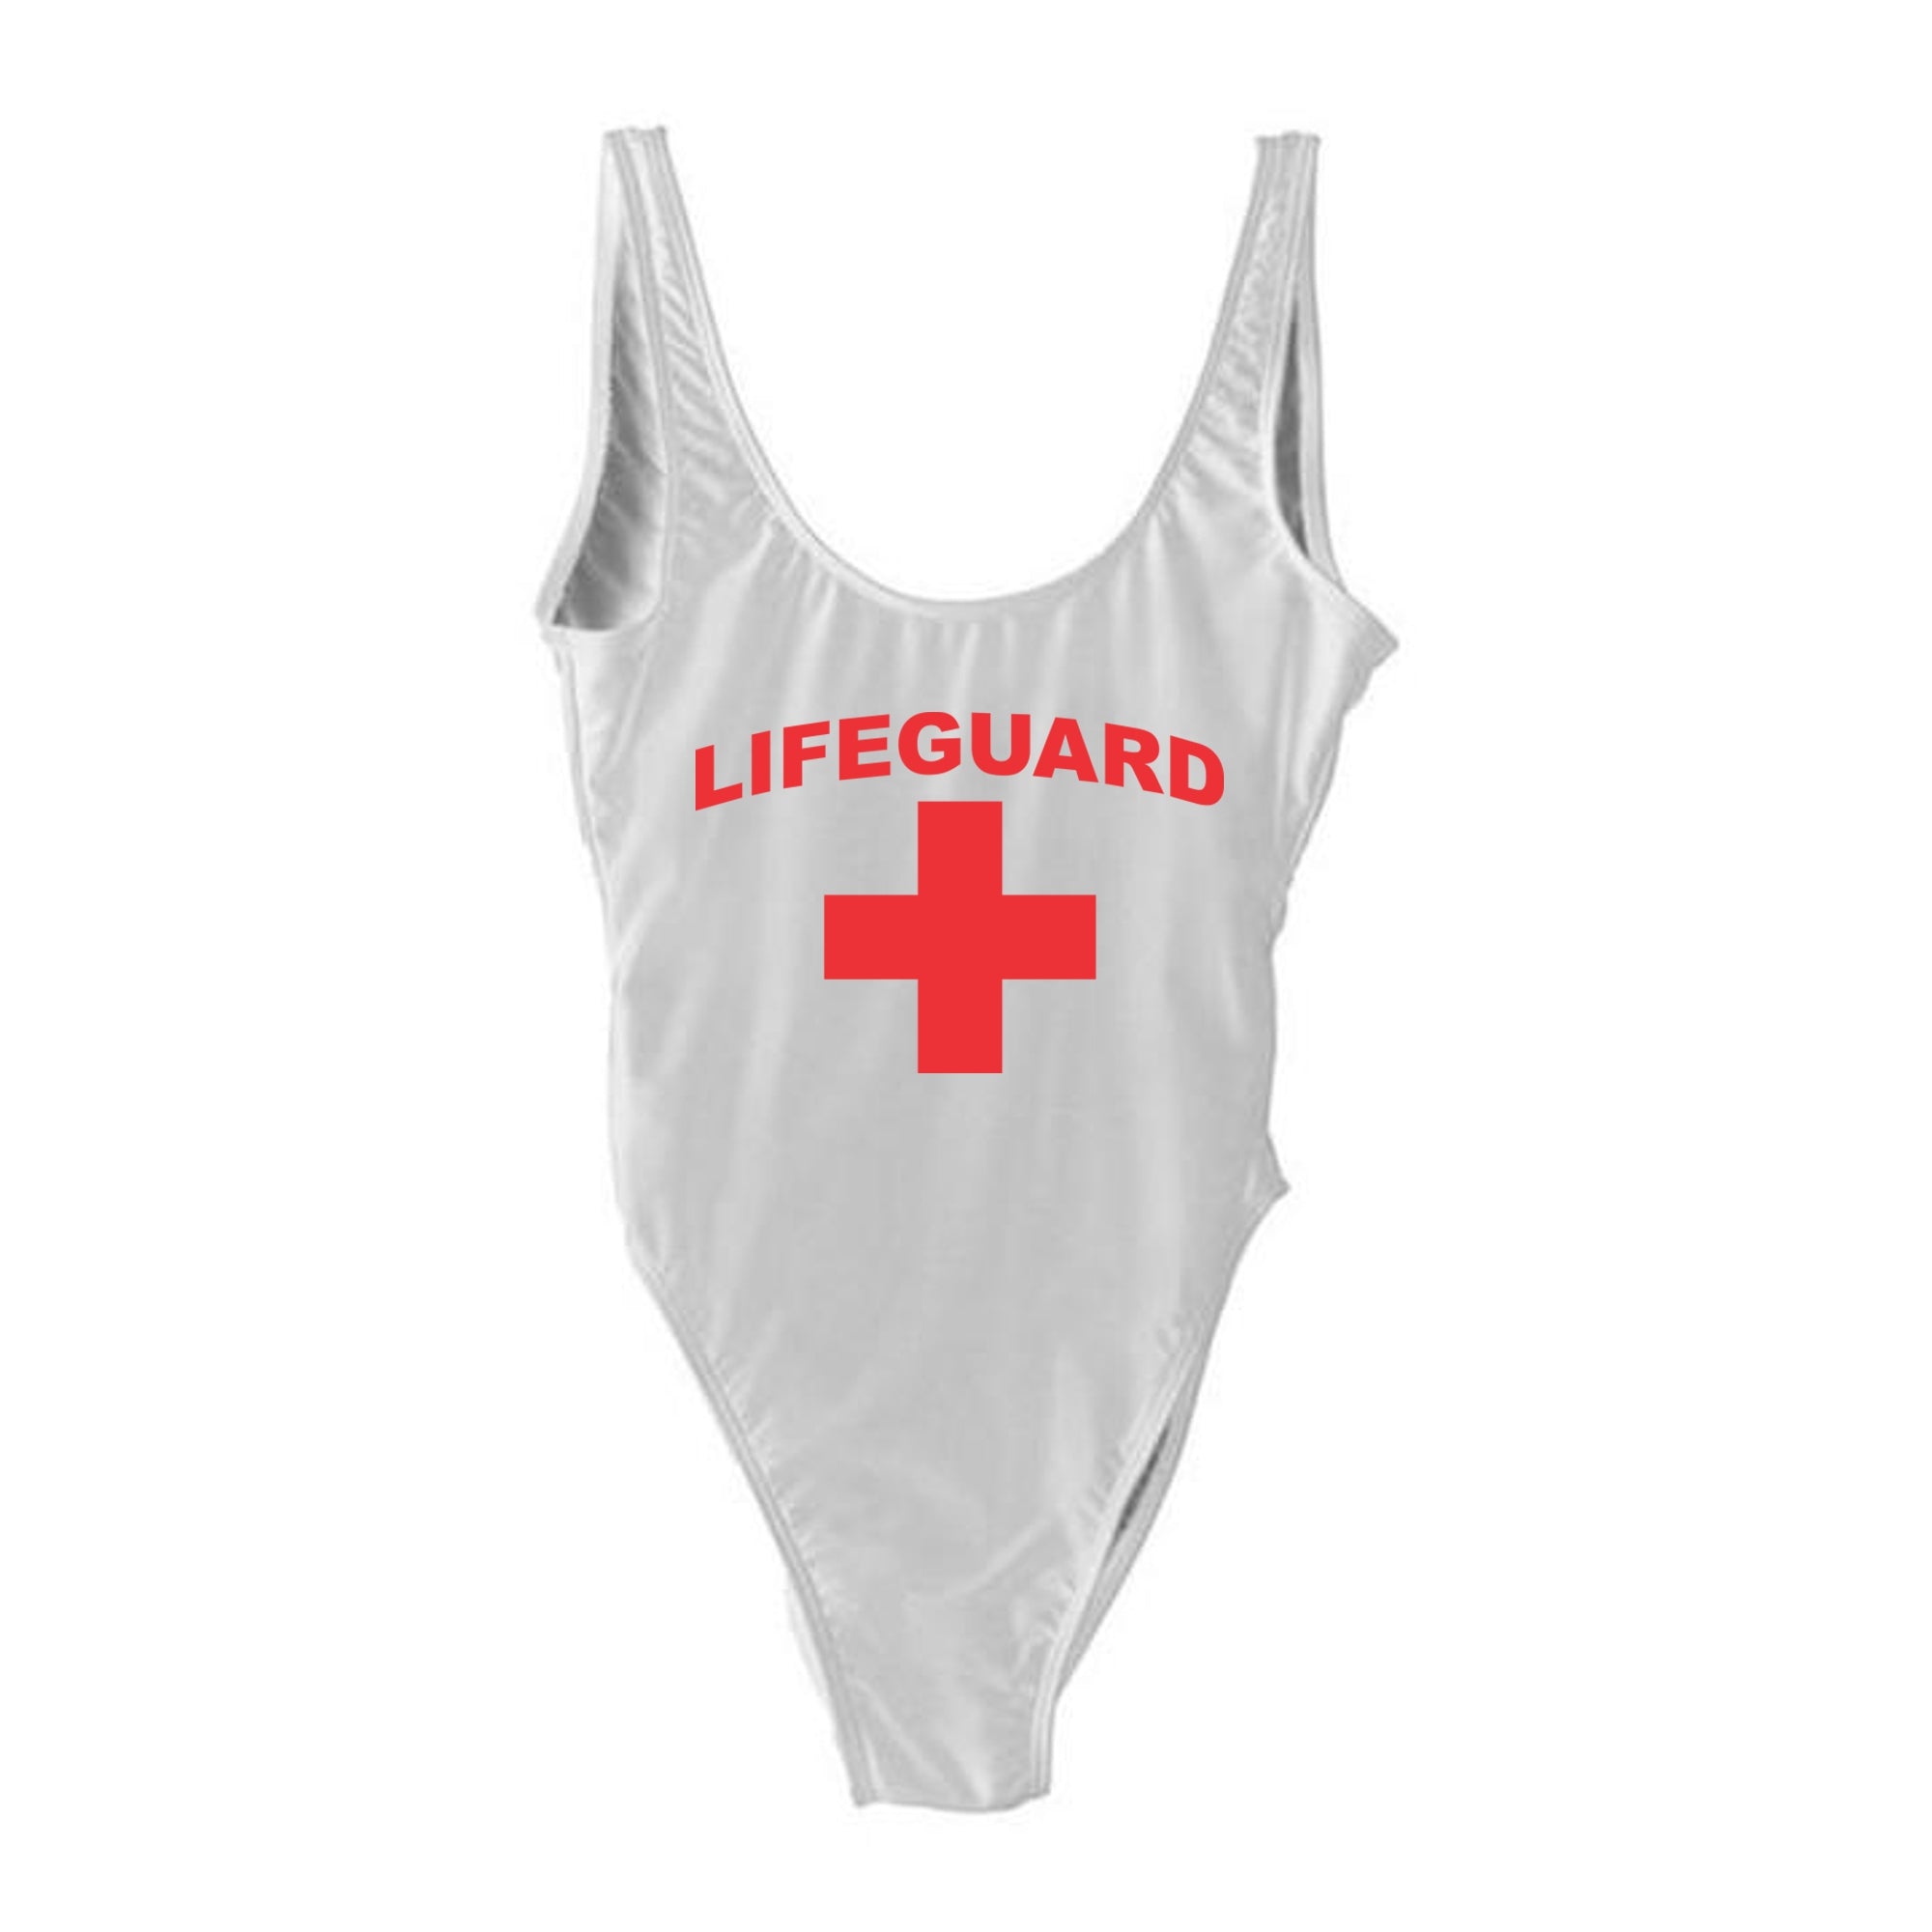 Lifeguard Costume [SWIMSUIT]